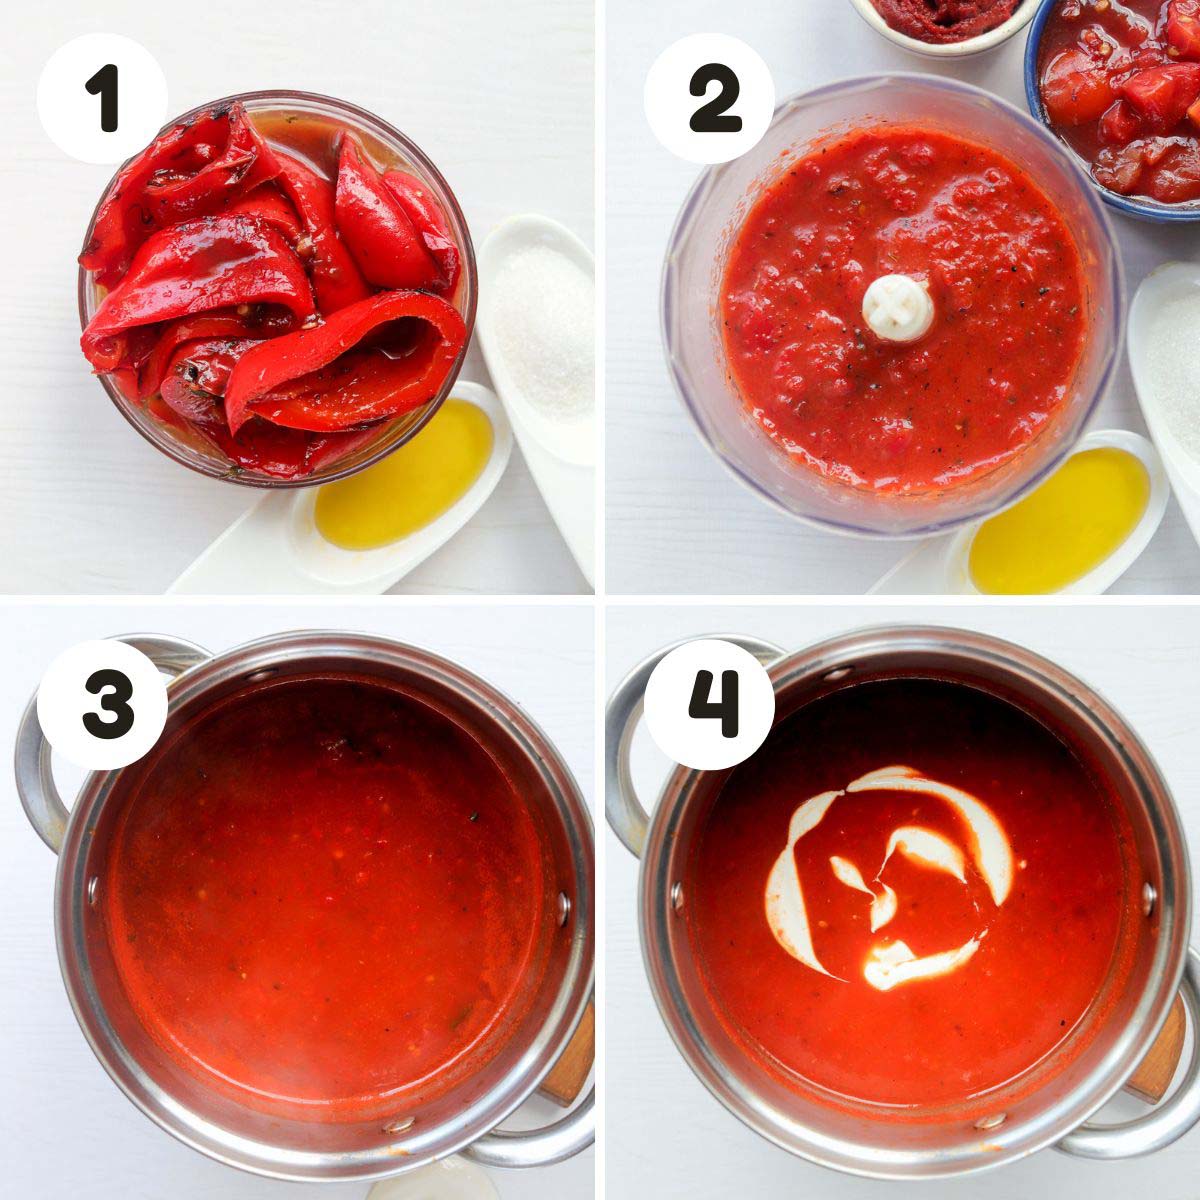 Steps to make the tomato soup.